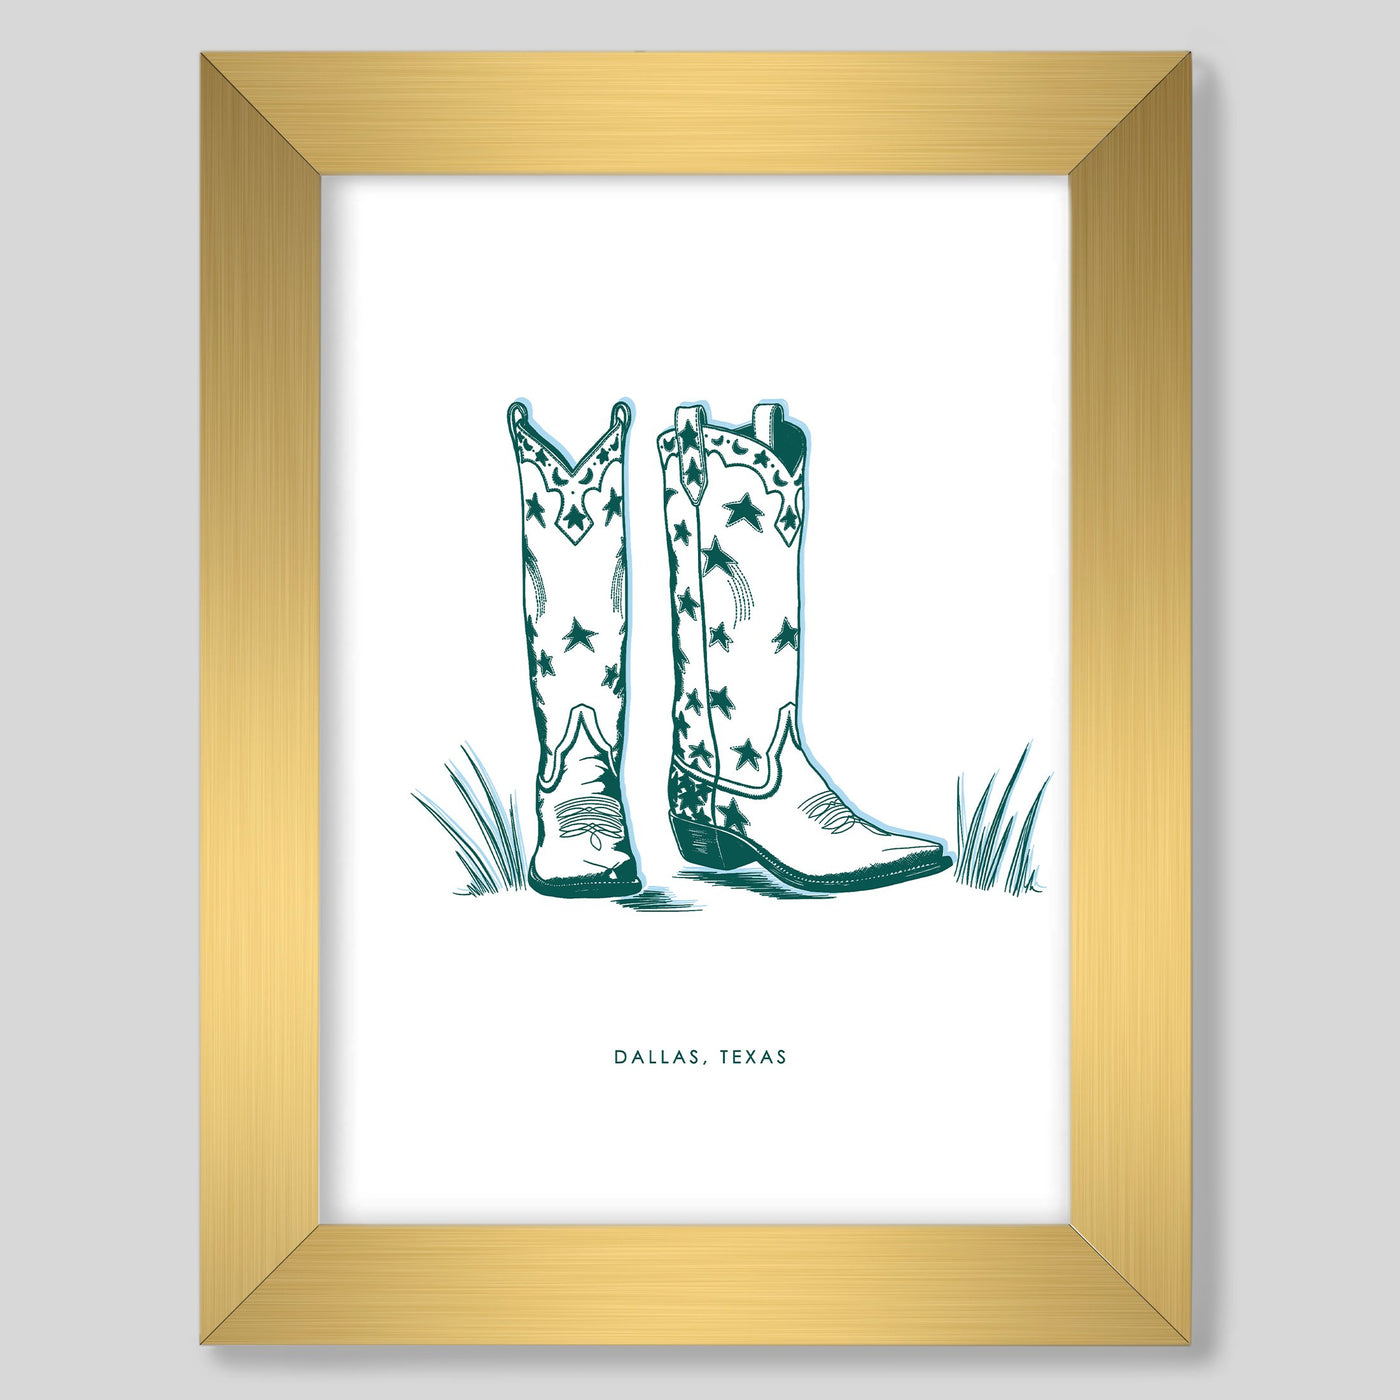 Gallery Prints White / 8x10 / gold frame Dallas Boots Gallery Print Katie Kime